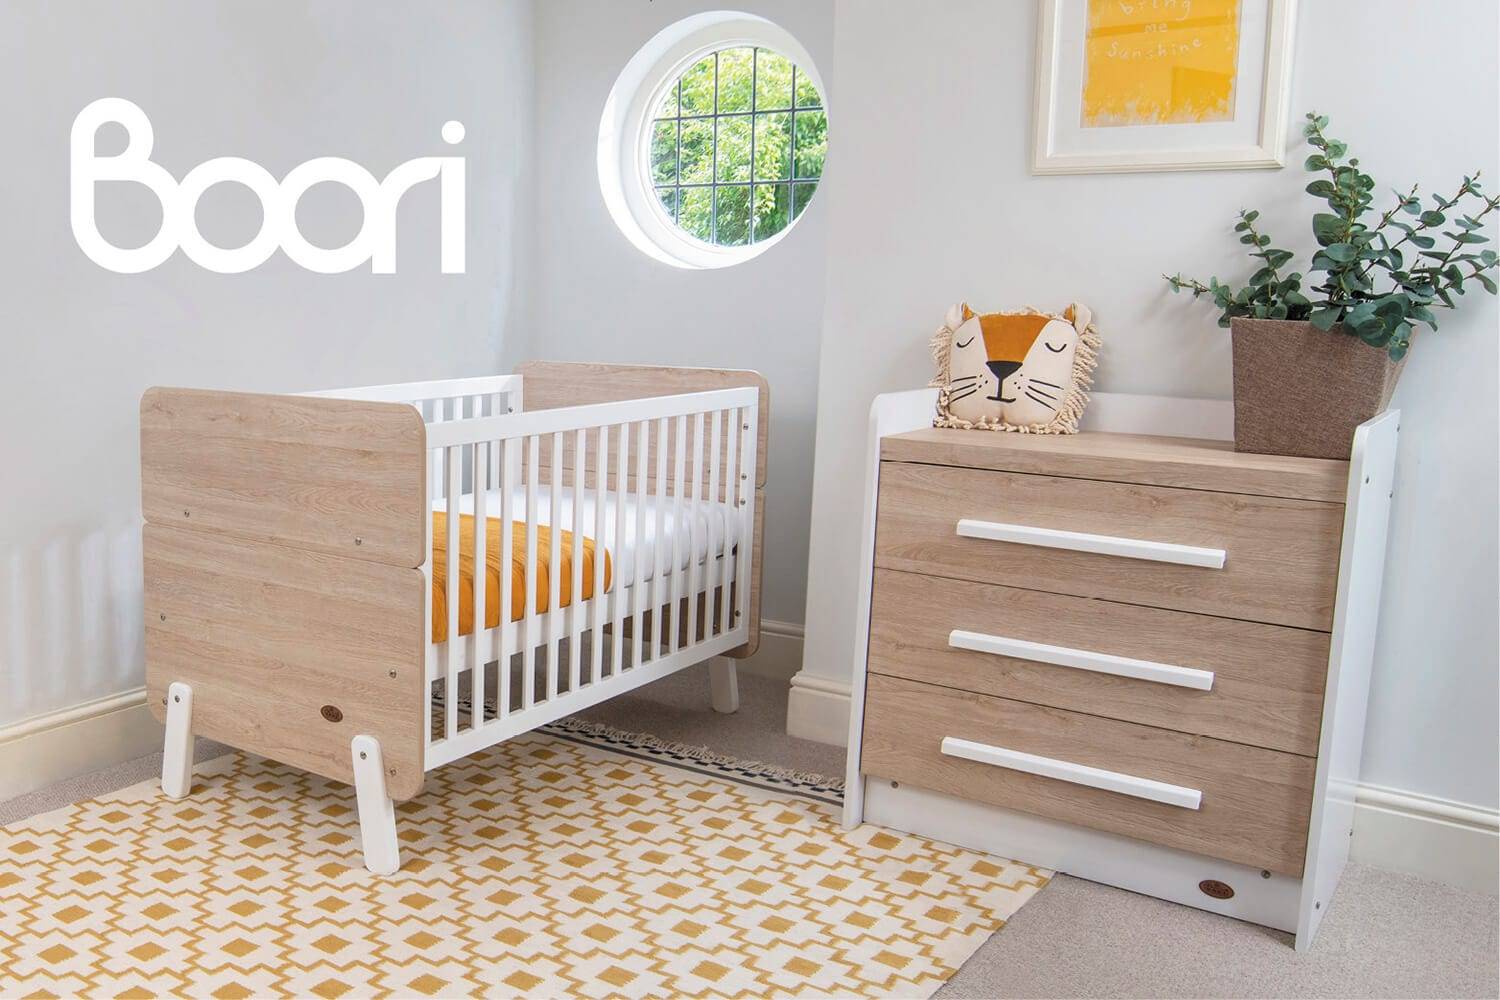 Boori Baby Furniture